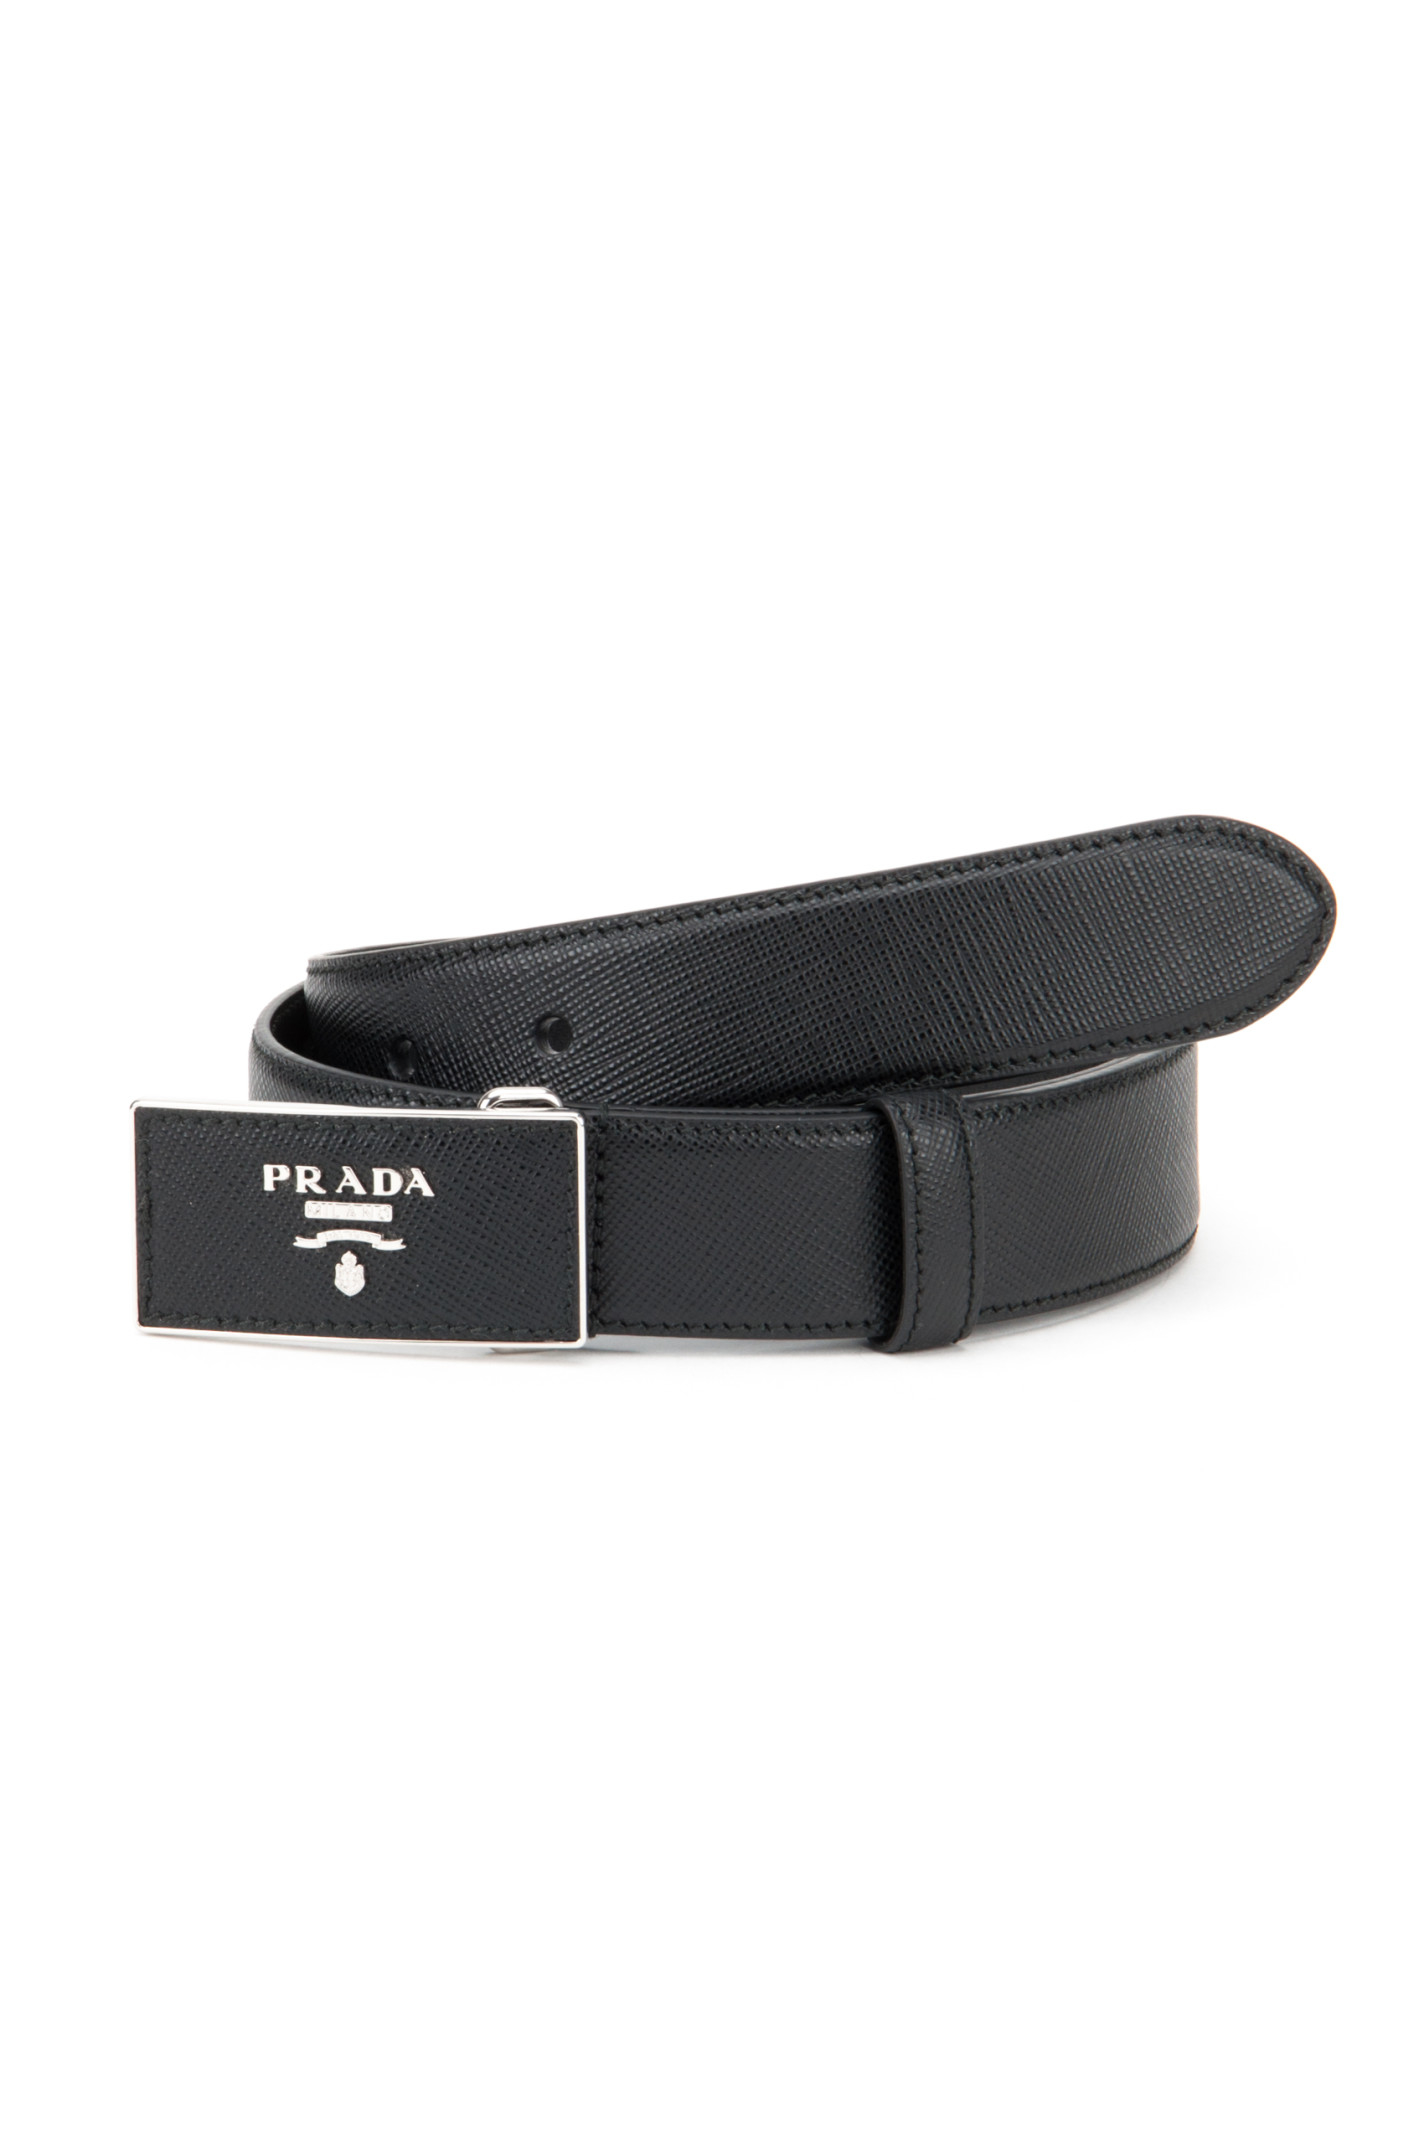 Prada Saffiano Belt in Black (NERO A) | Lyst  